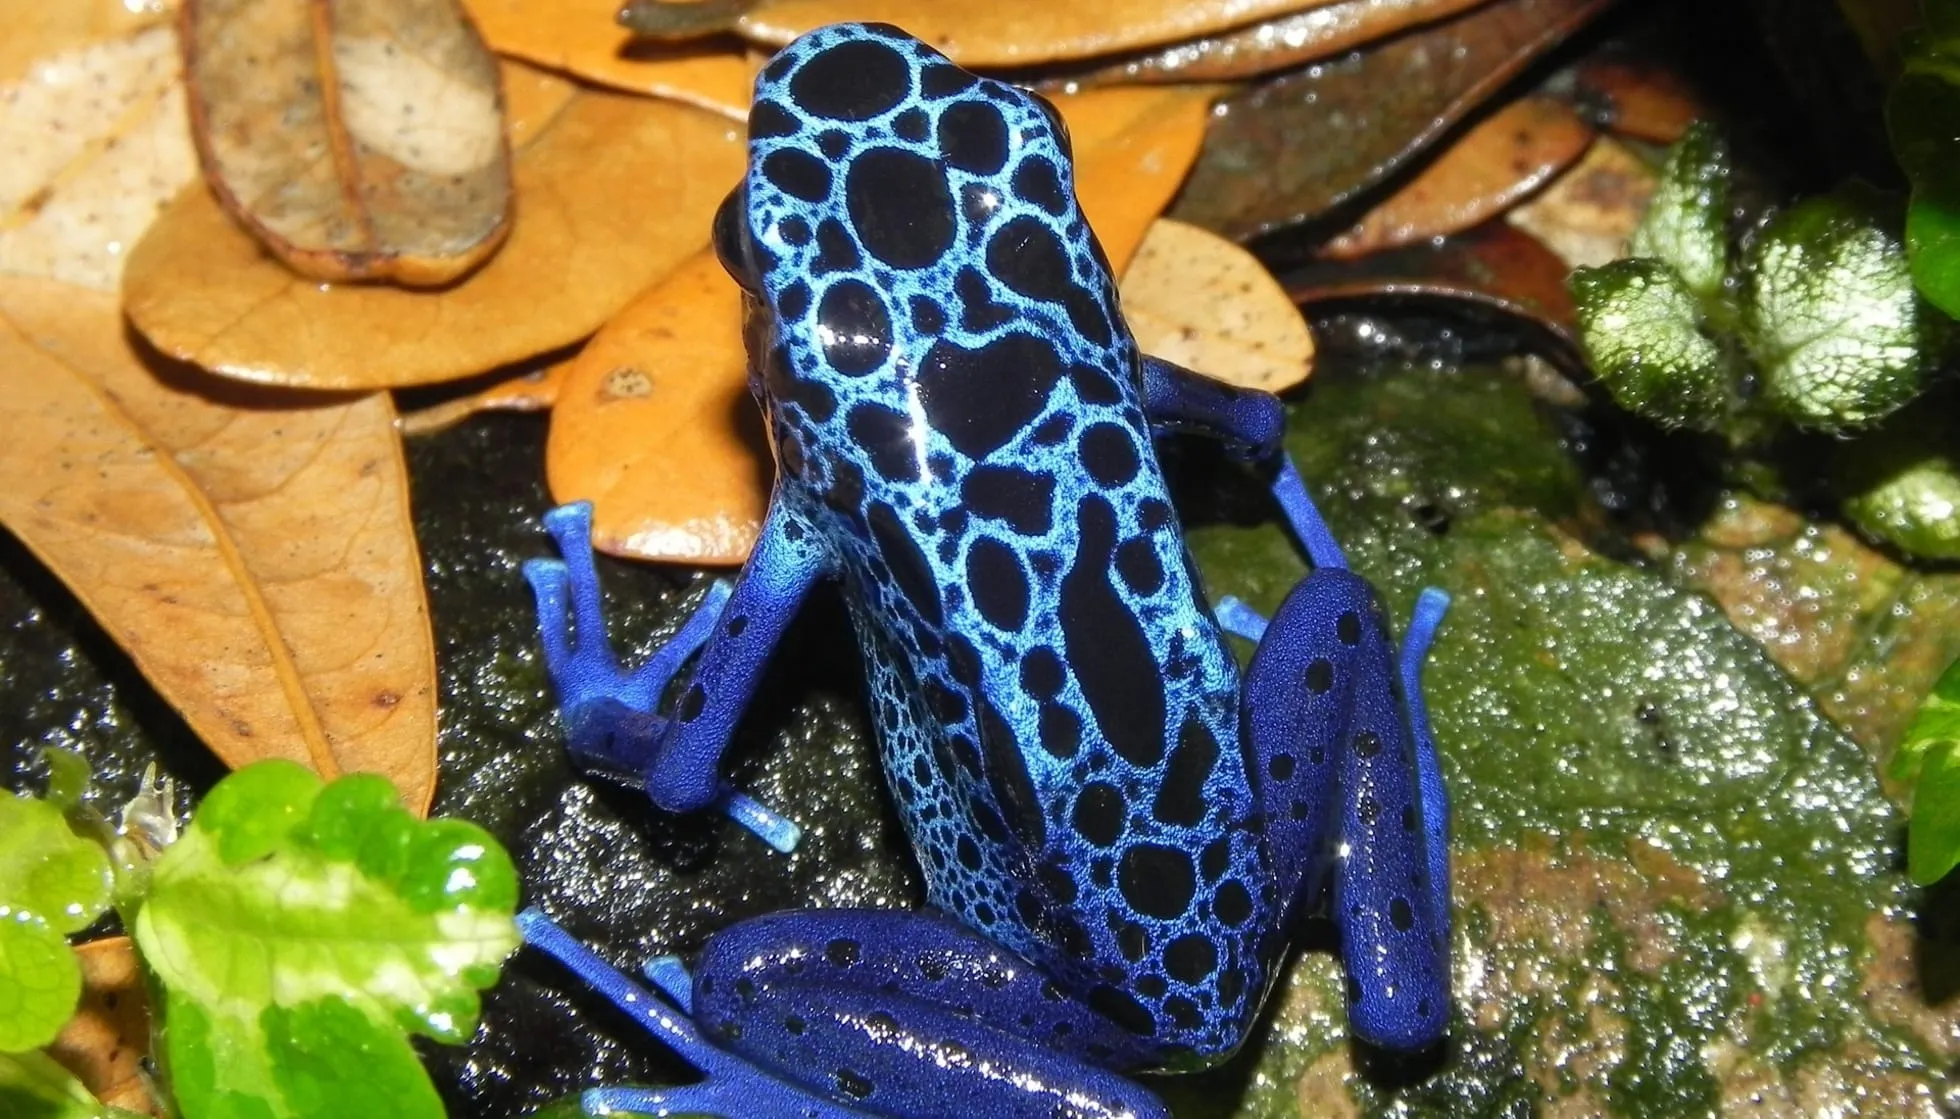  Blue Poison Dart Frog